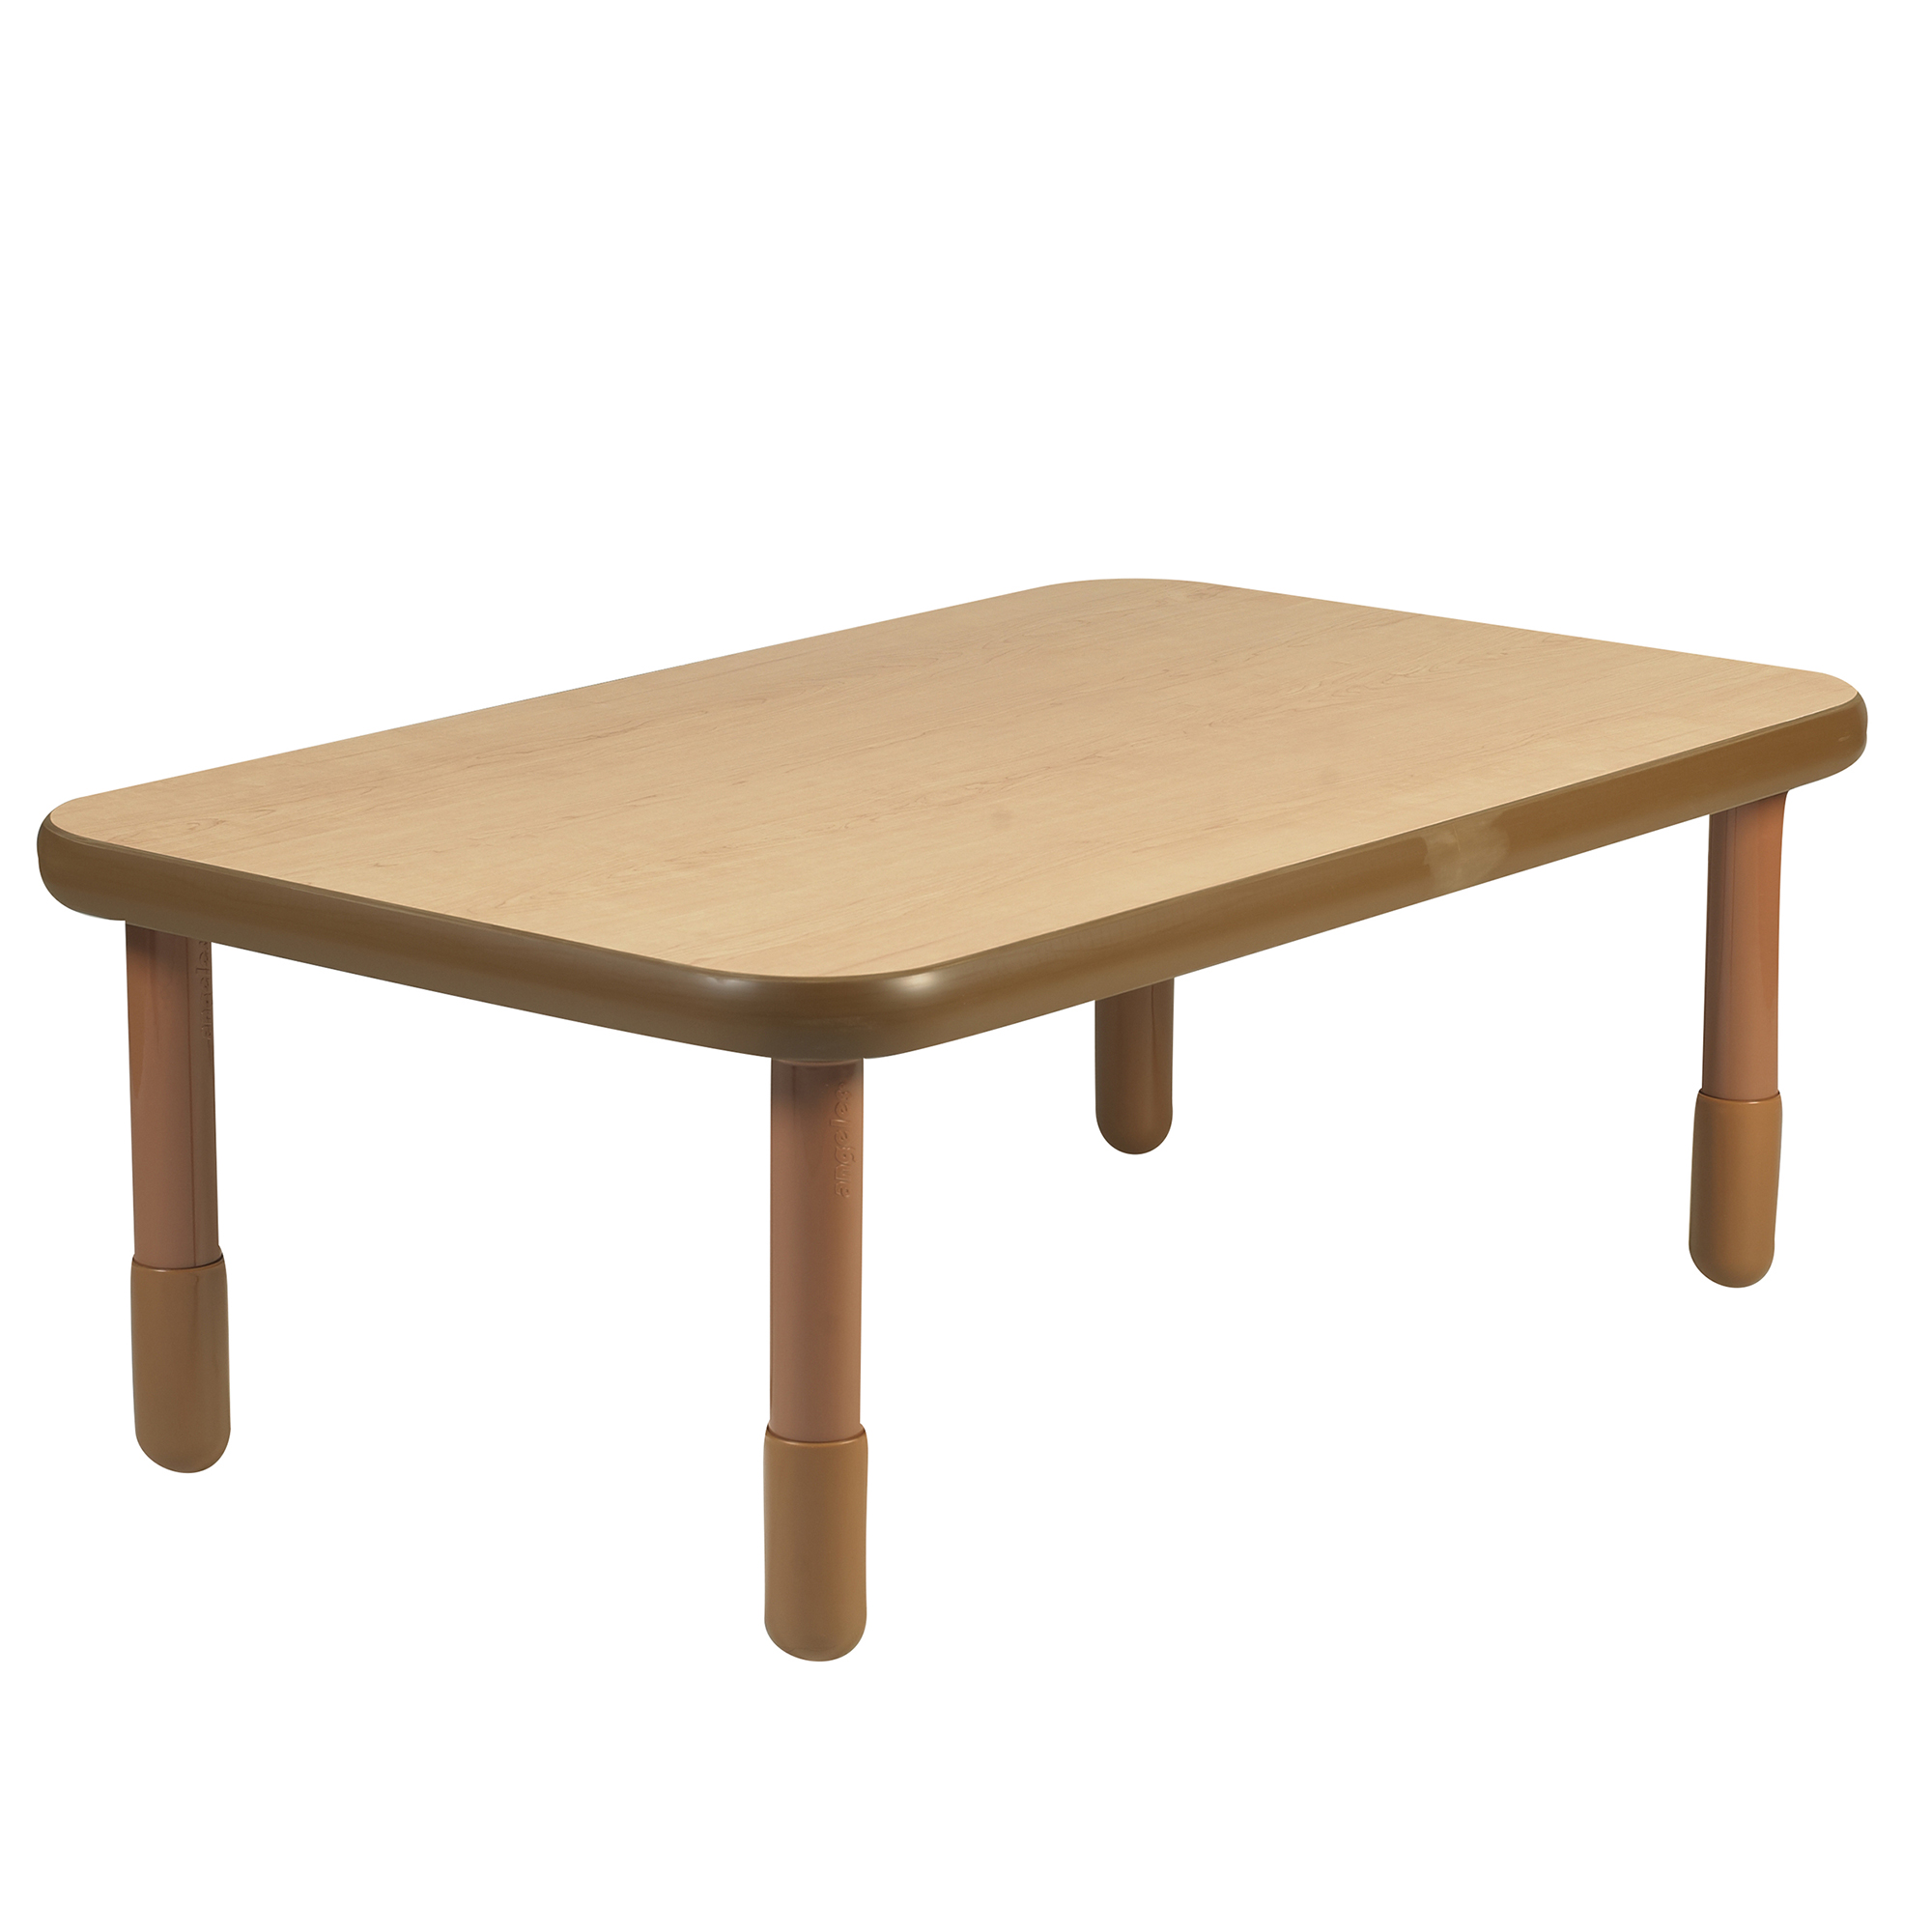 BaseLine® 122 cm  x 76 cm  Rectangular Table - Natural Wood with 45,5 cm  Legs